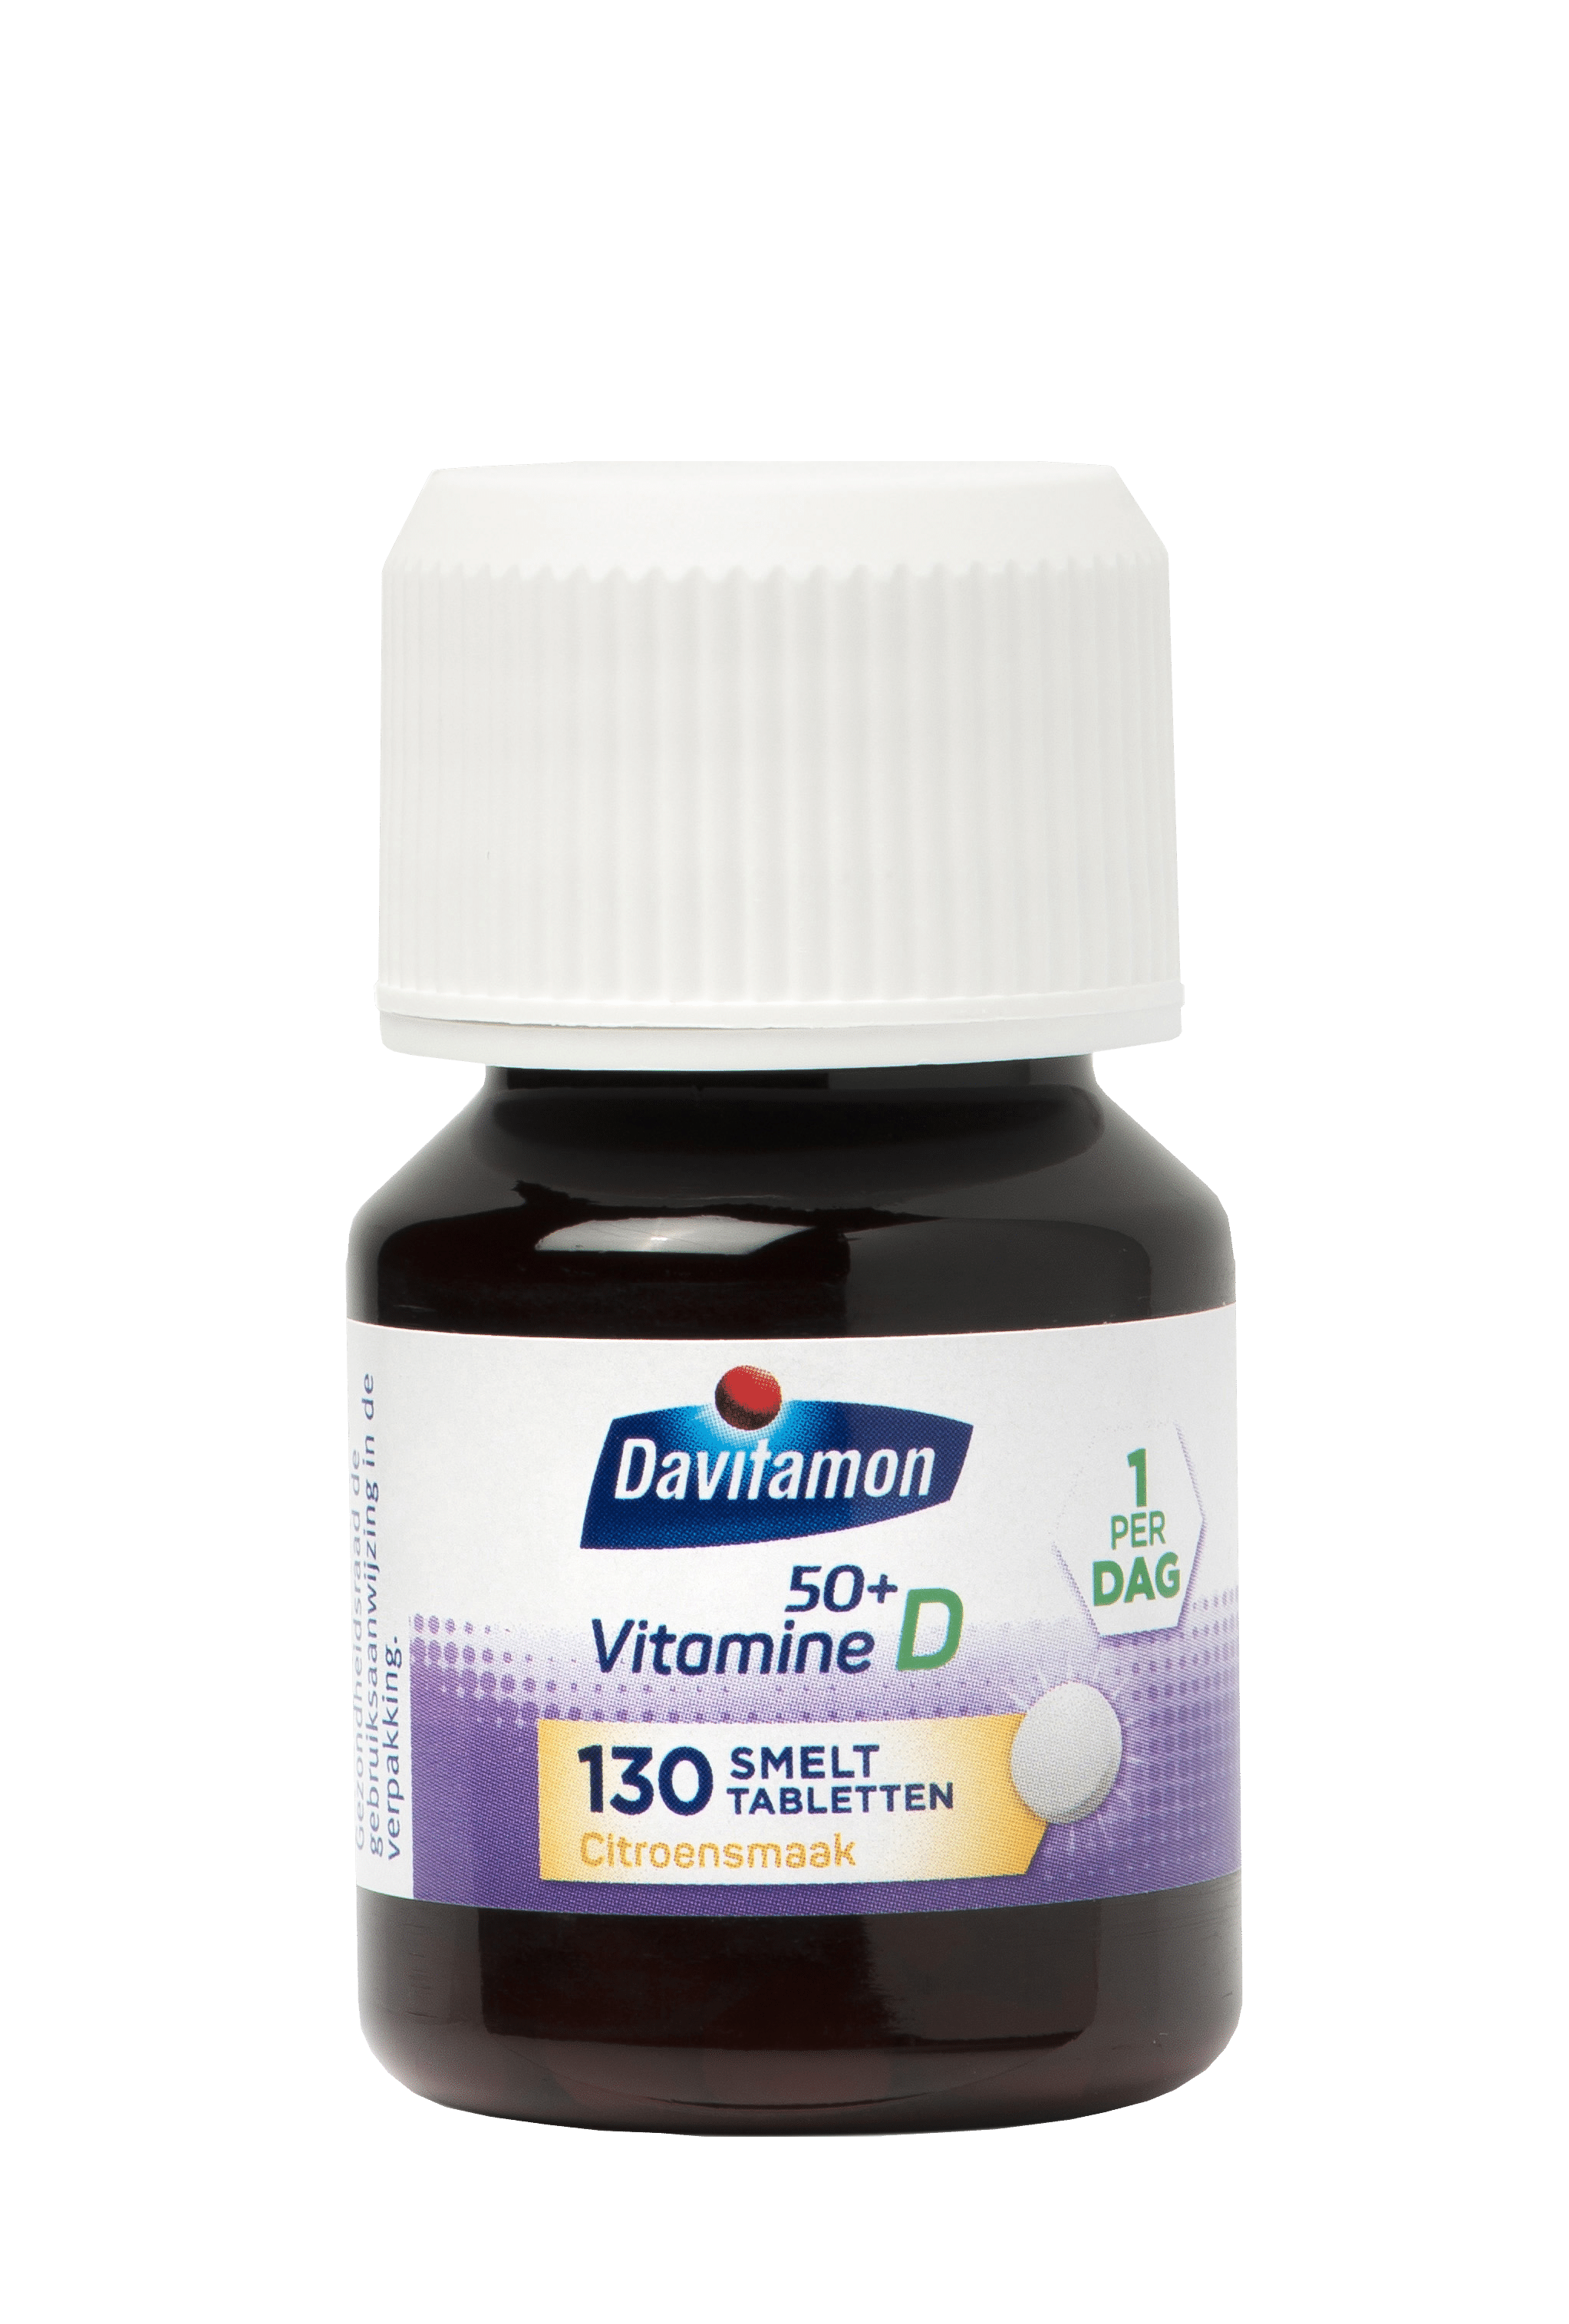 Davitamon Vitamine D 50+ Smelttabletten Product 2